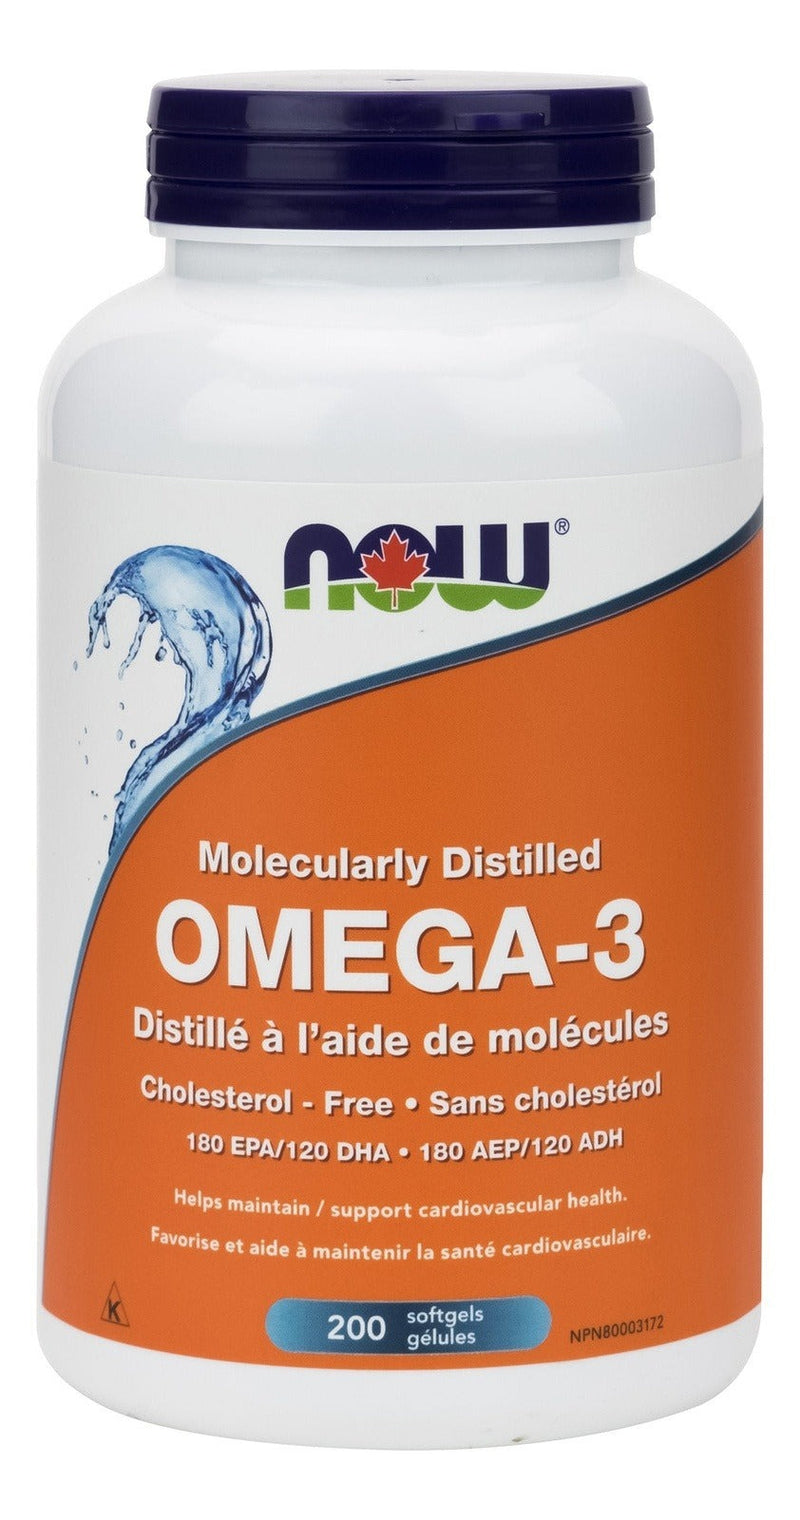 NOW Omega-3 Molecularly Distilled Cholesterol-Free 200 Softgels Image 1